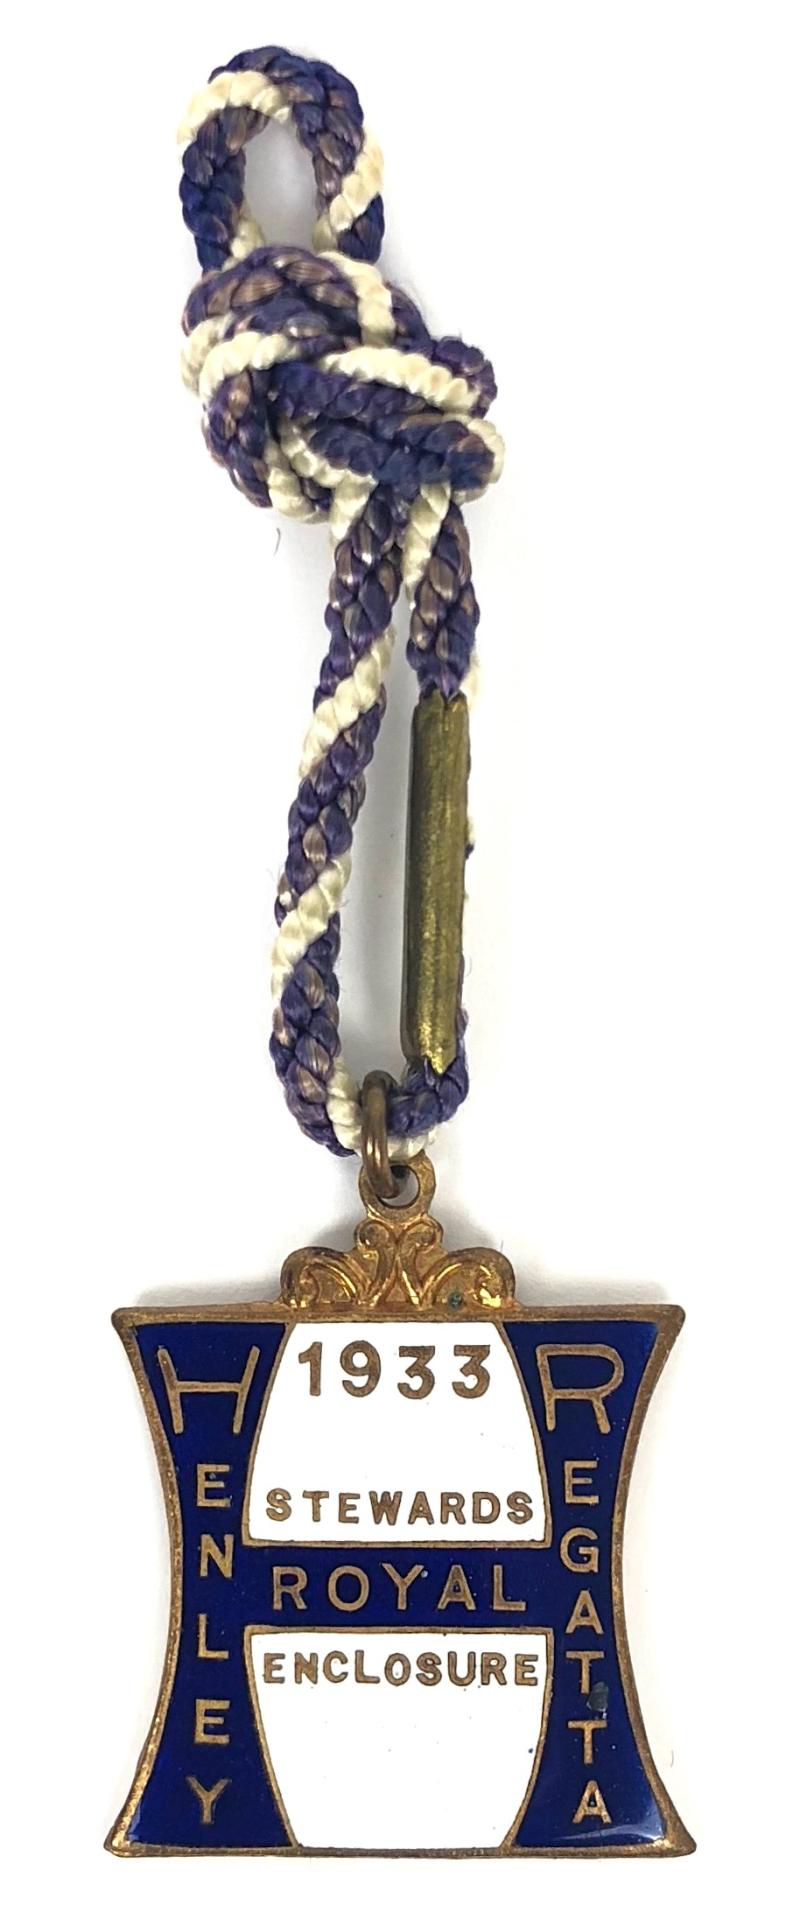 1933 Henley Royal Regatta Stewards Enclosure badge